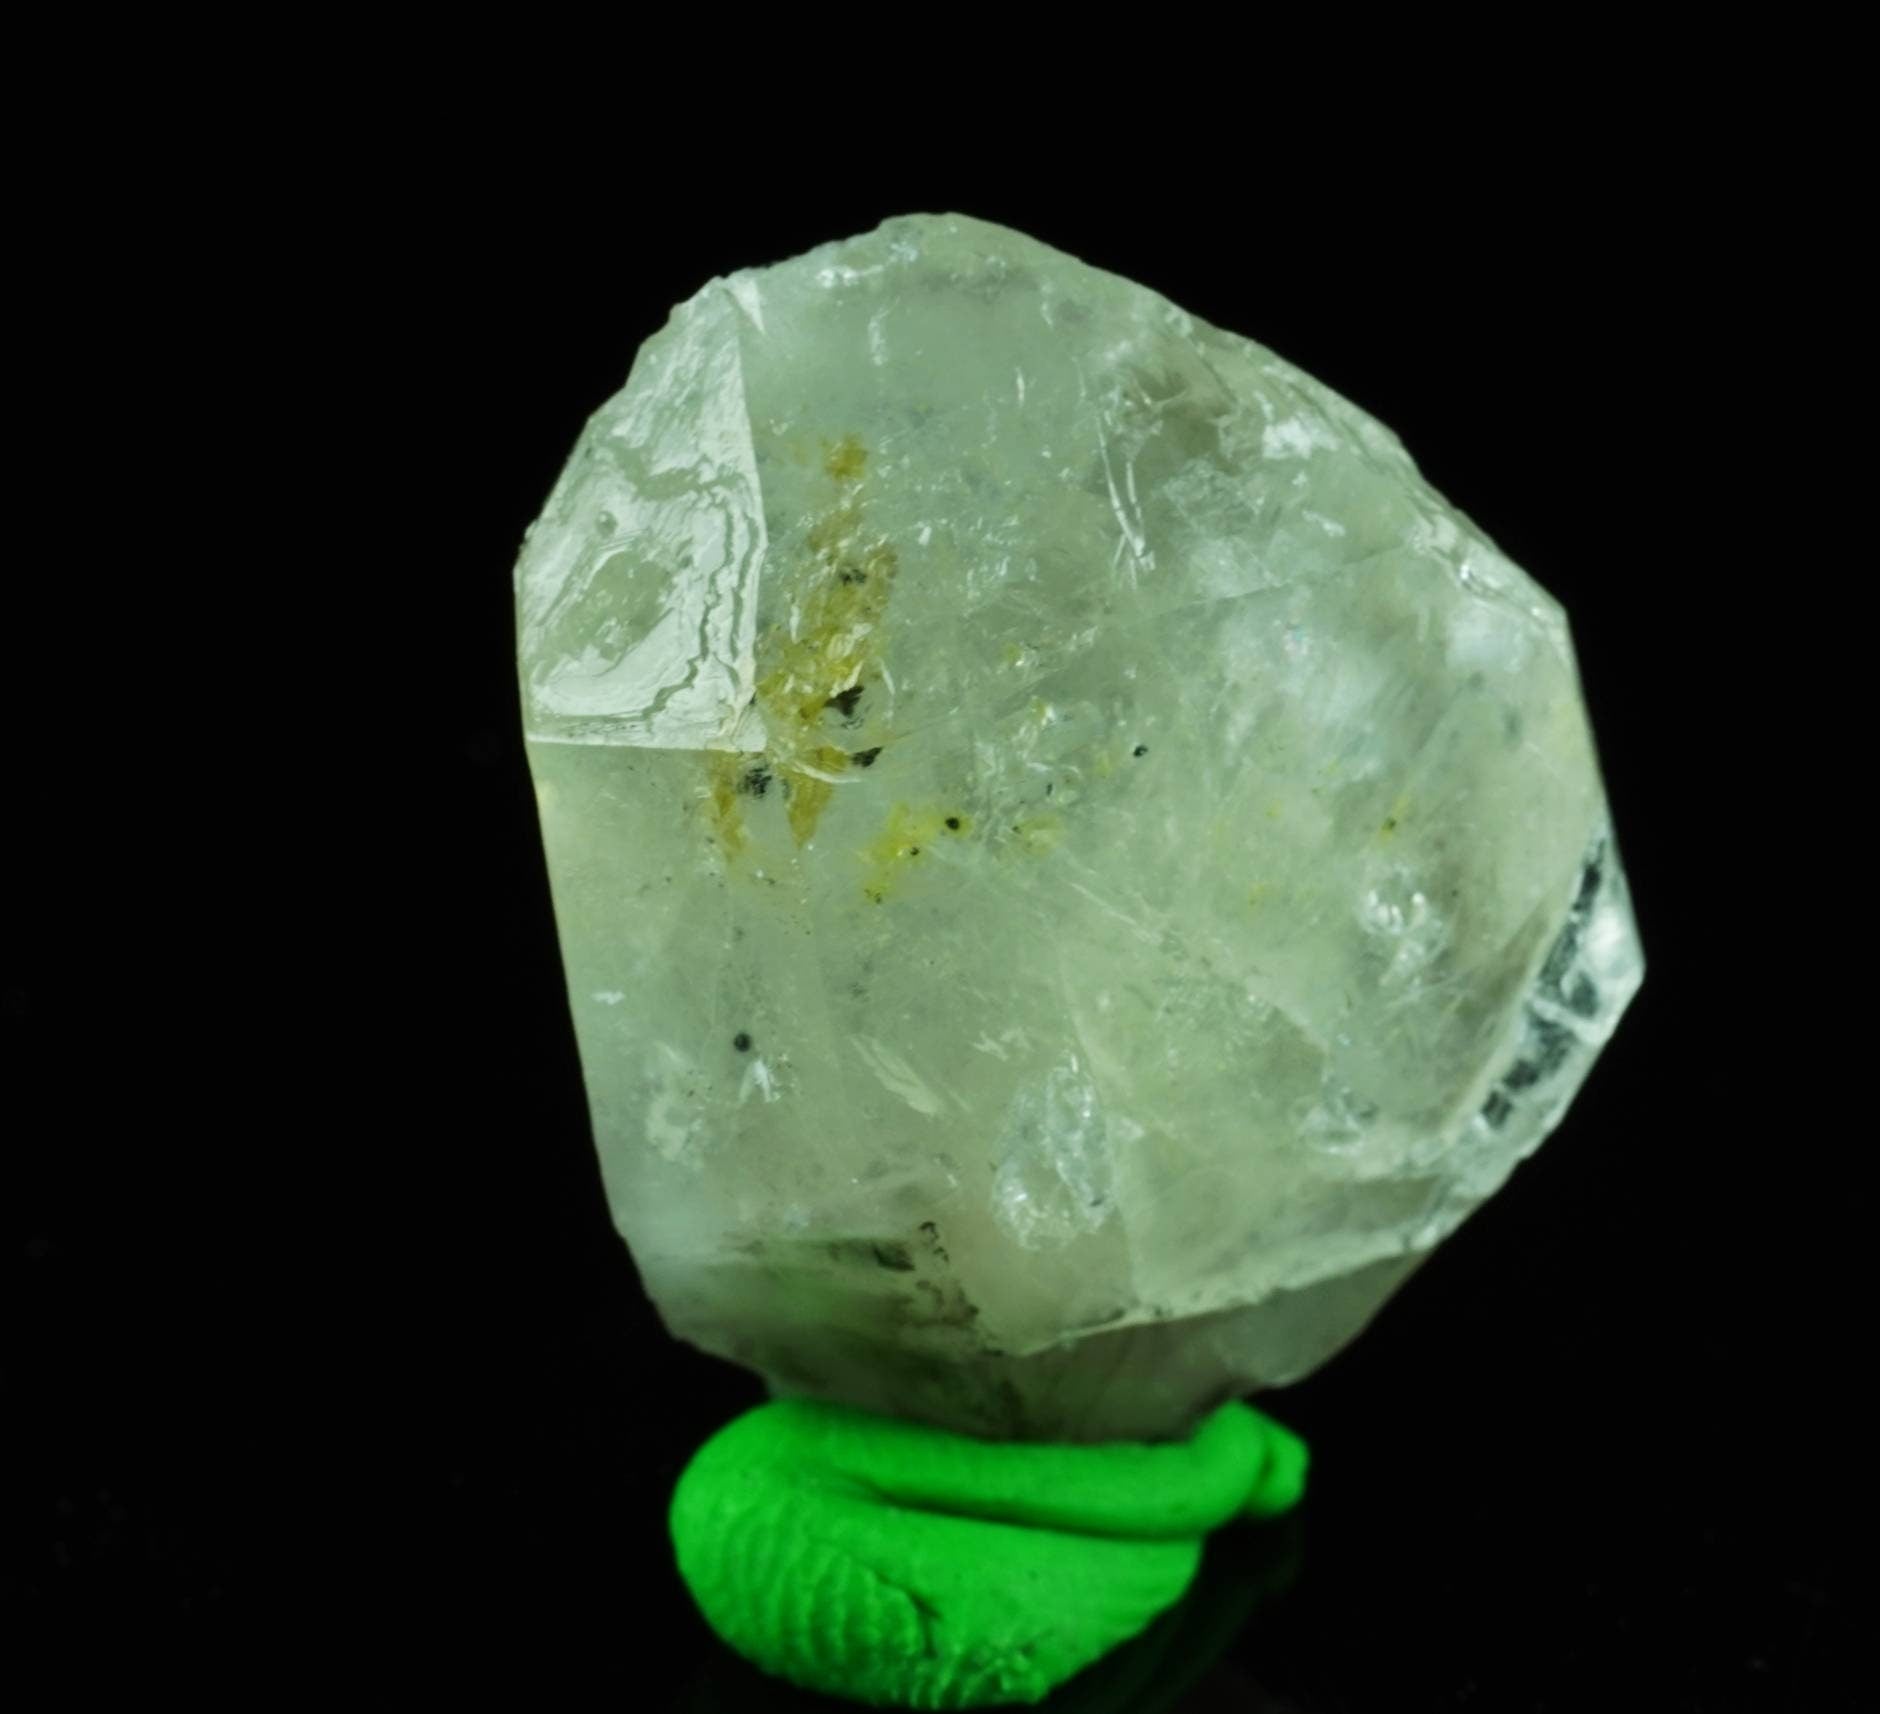 ARSAA GEMS AND MINERALSAesthetic fine quality beautiful UV reactive petroleum quartz crystal from Balochistan Pakistan, weight 8.1 grams - Premium  from ARSAA GEMS AND MINERALS - Just $60.00! Shop now at ARSAA GEMS AND MINERALS